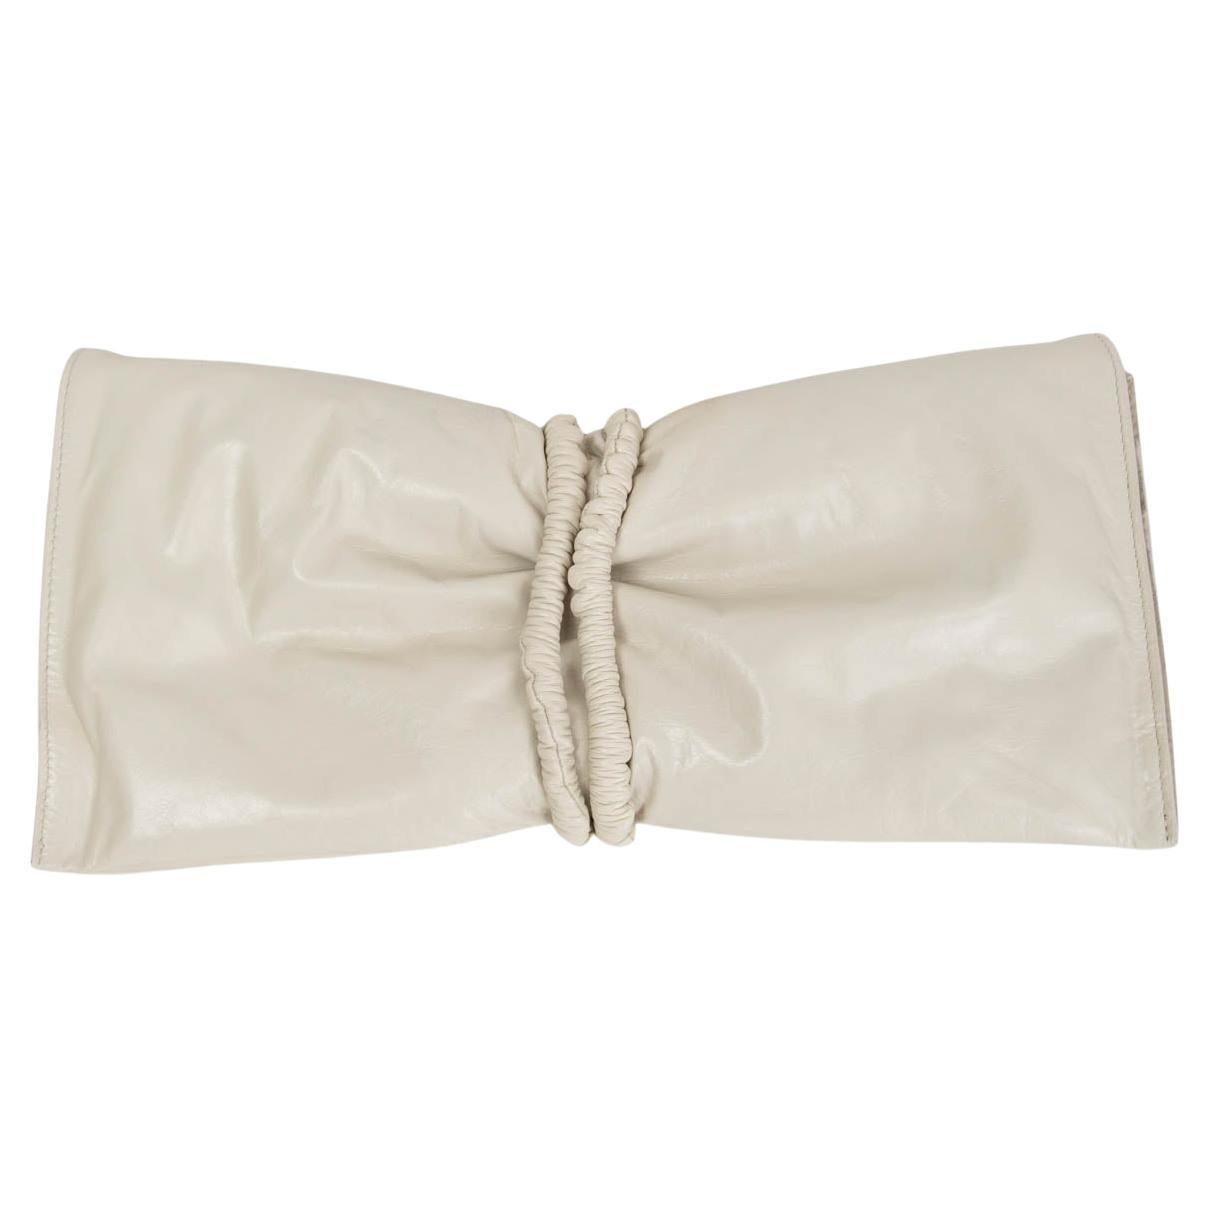 BOTTEGA VENETA pale sand beige leather PADDED LEATHER BIFOLD Clutch Bag For Sale